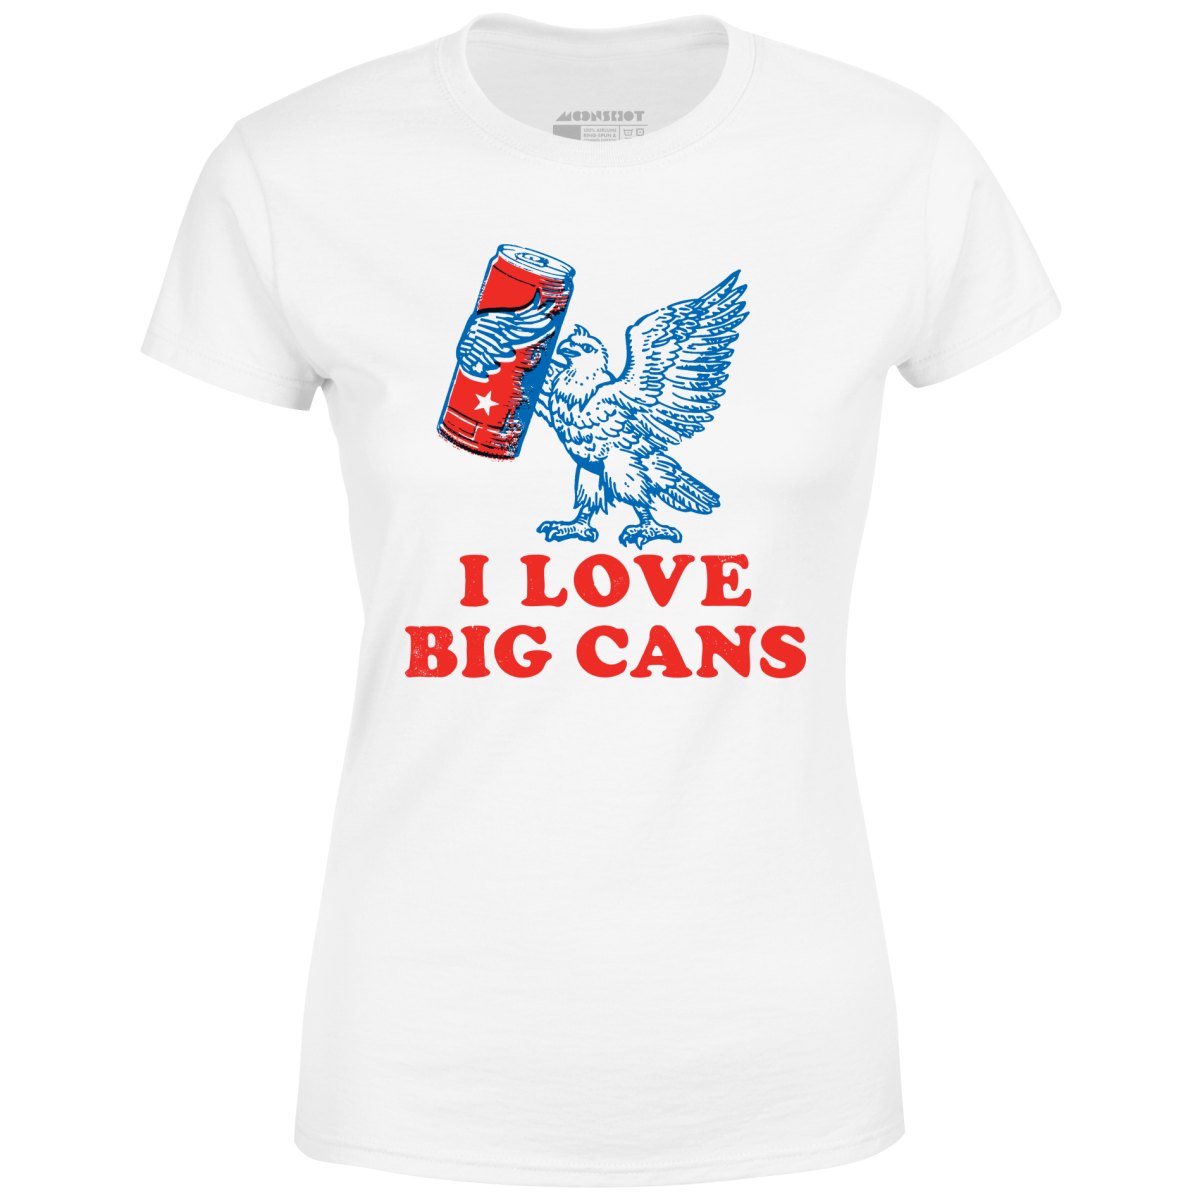 I Love Big Cans - Women's T-Shirt